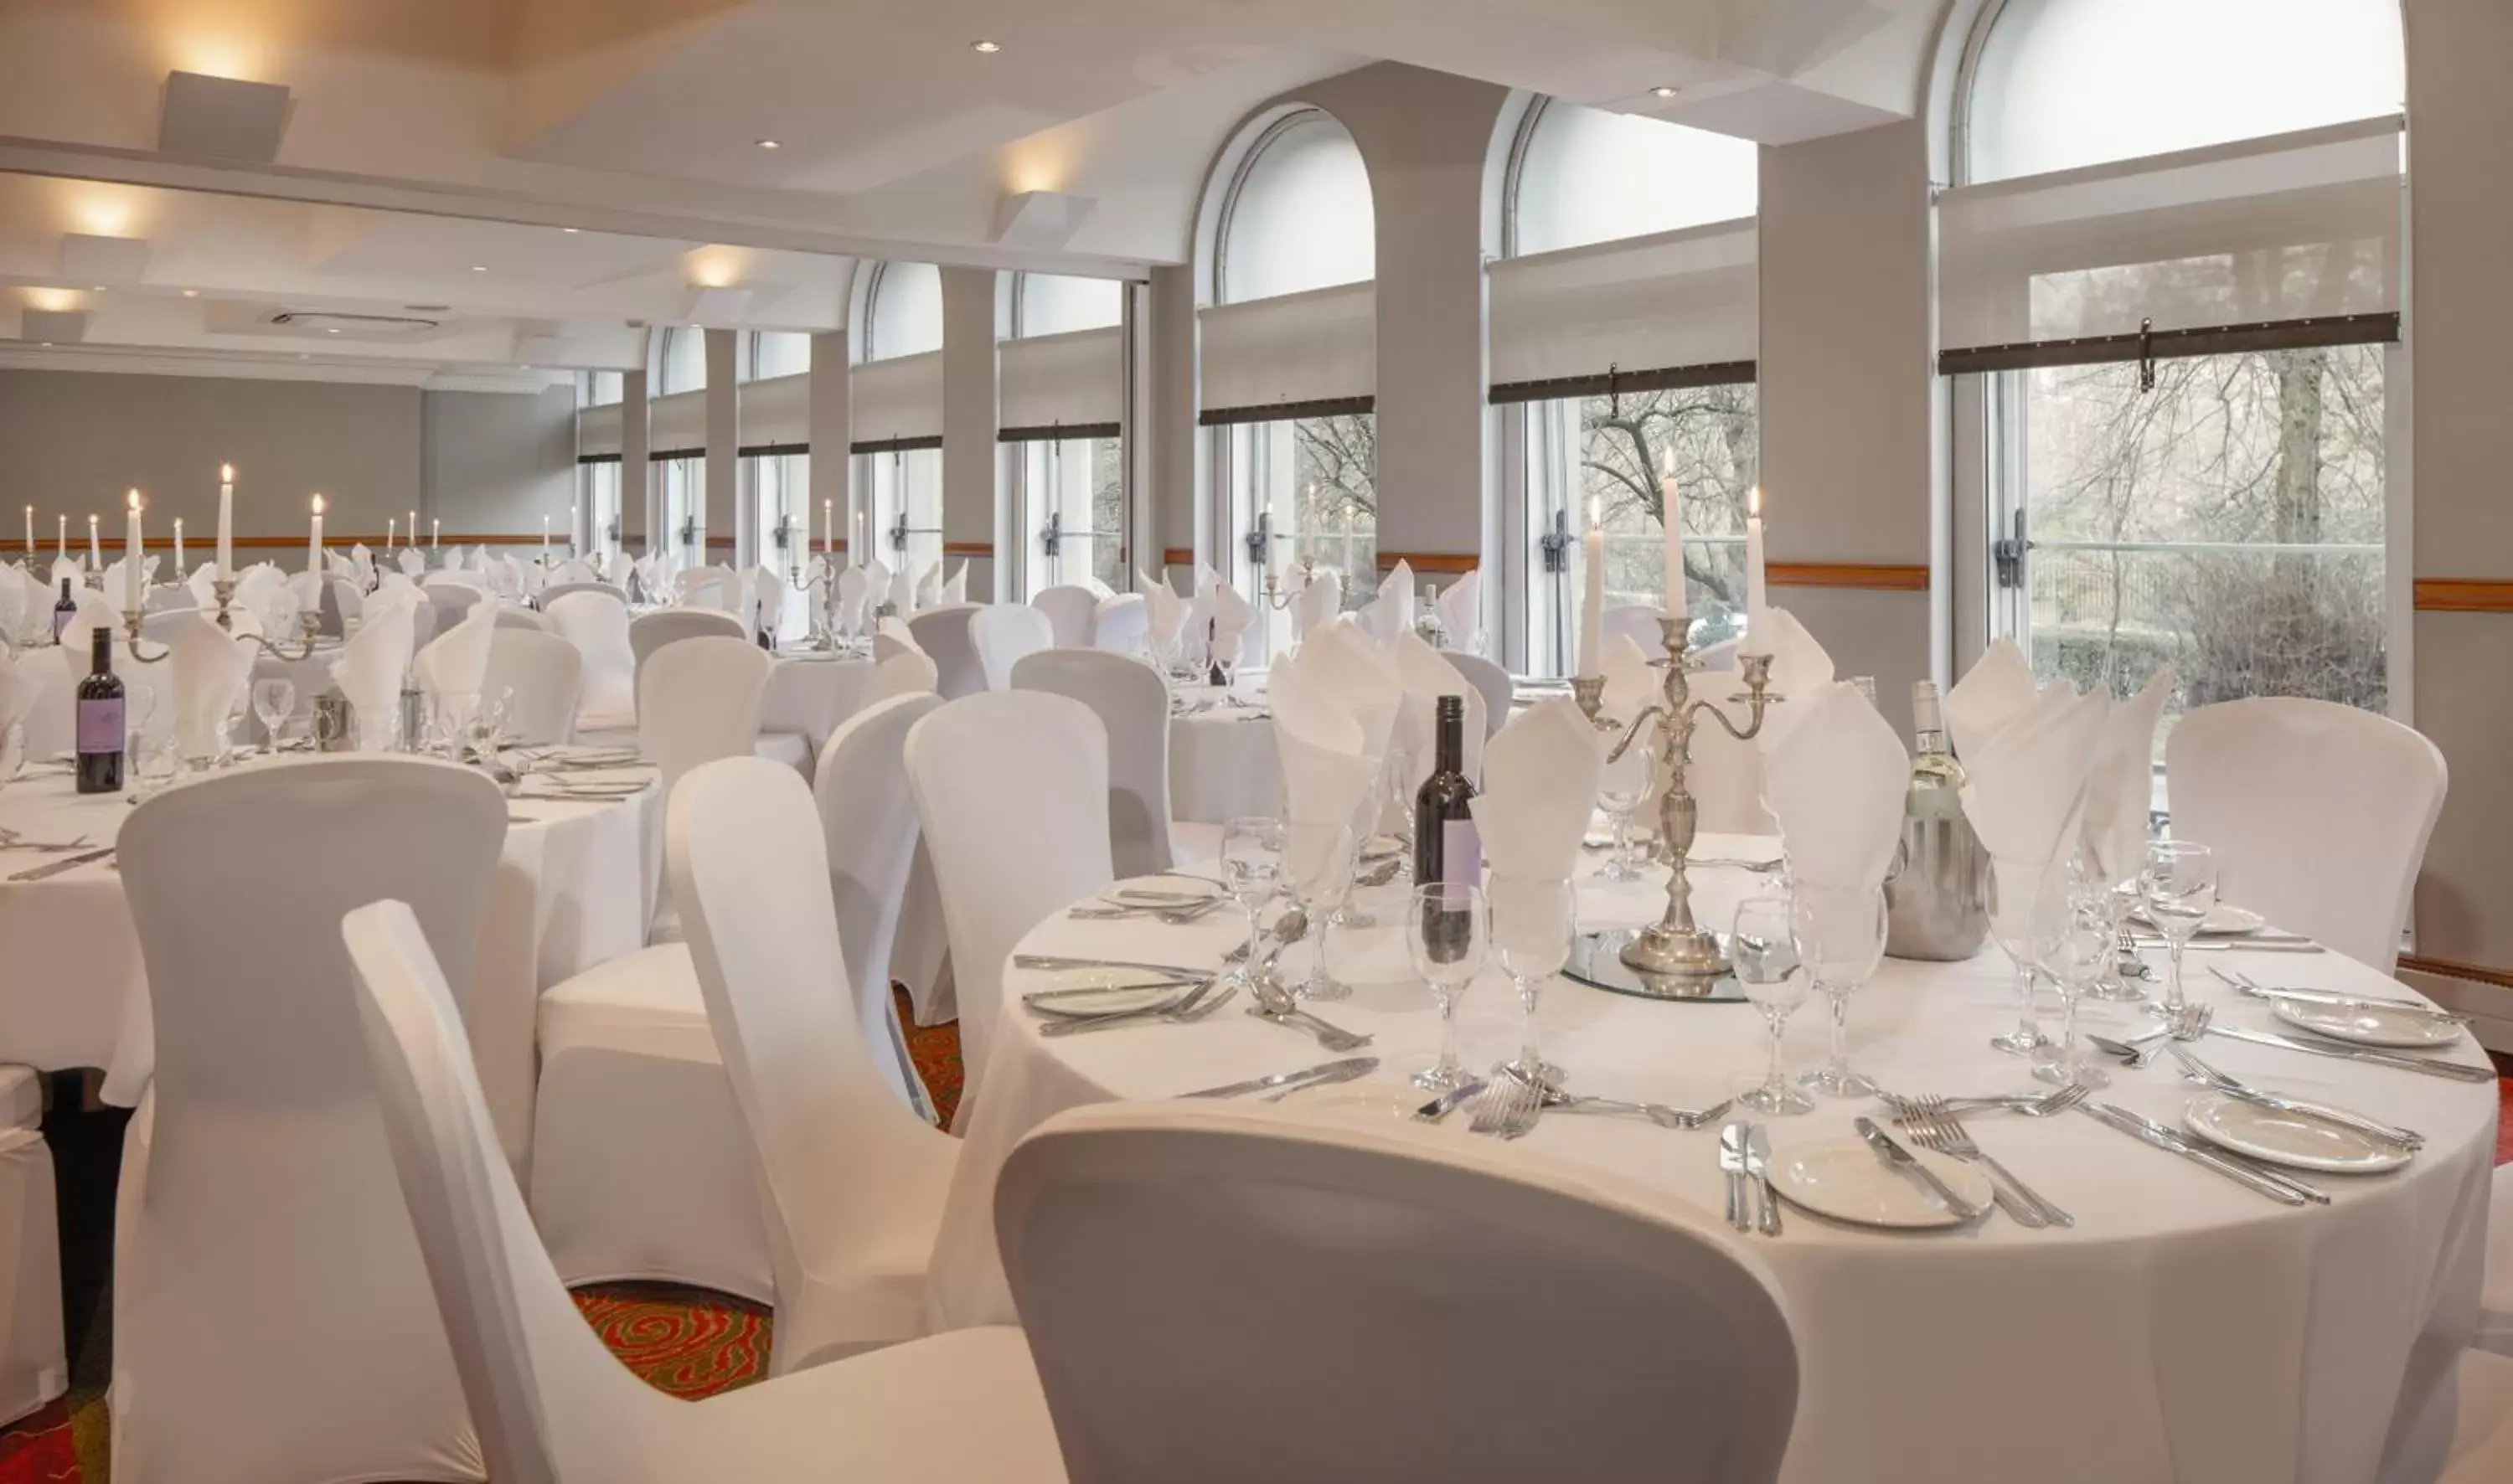 Banquet/Function facilities, Banquet Facilities in Glasgow Grosvenor Hotel